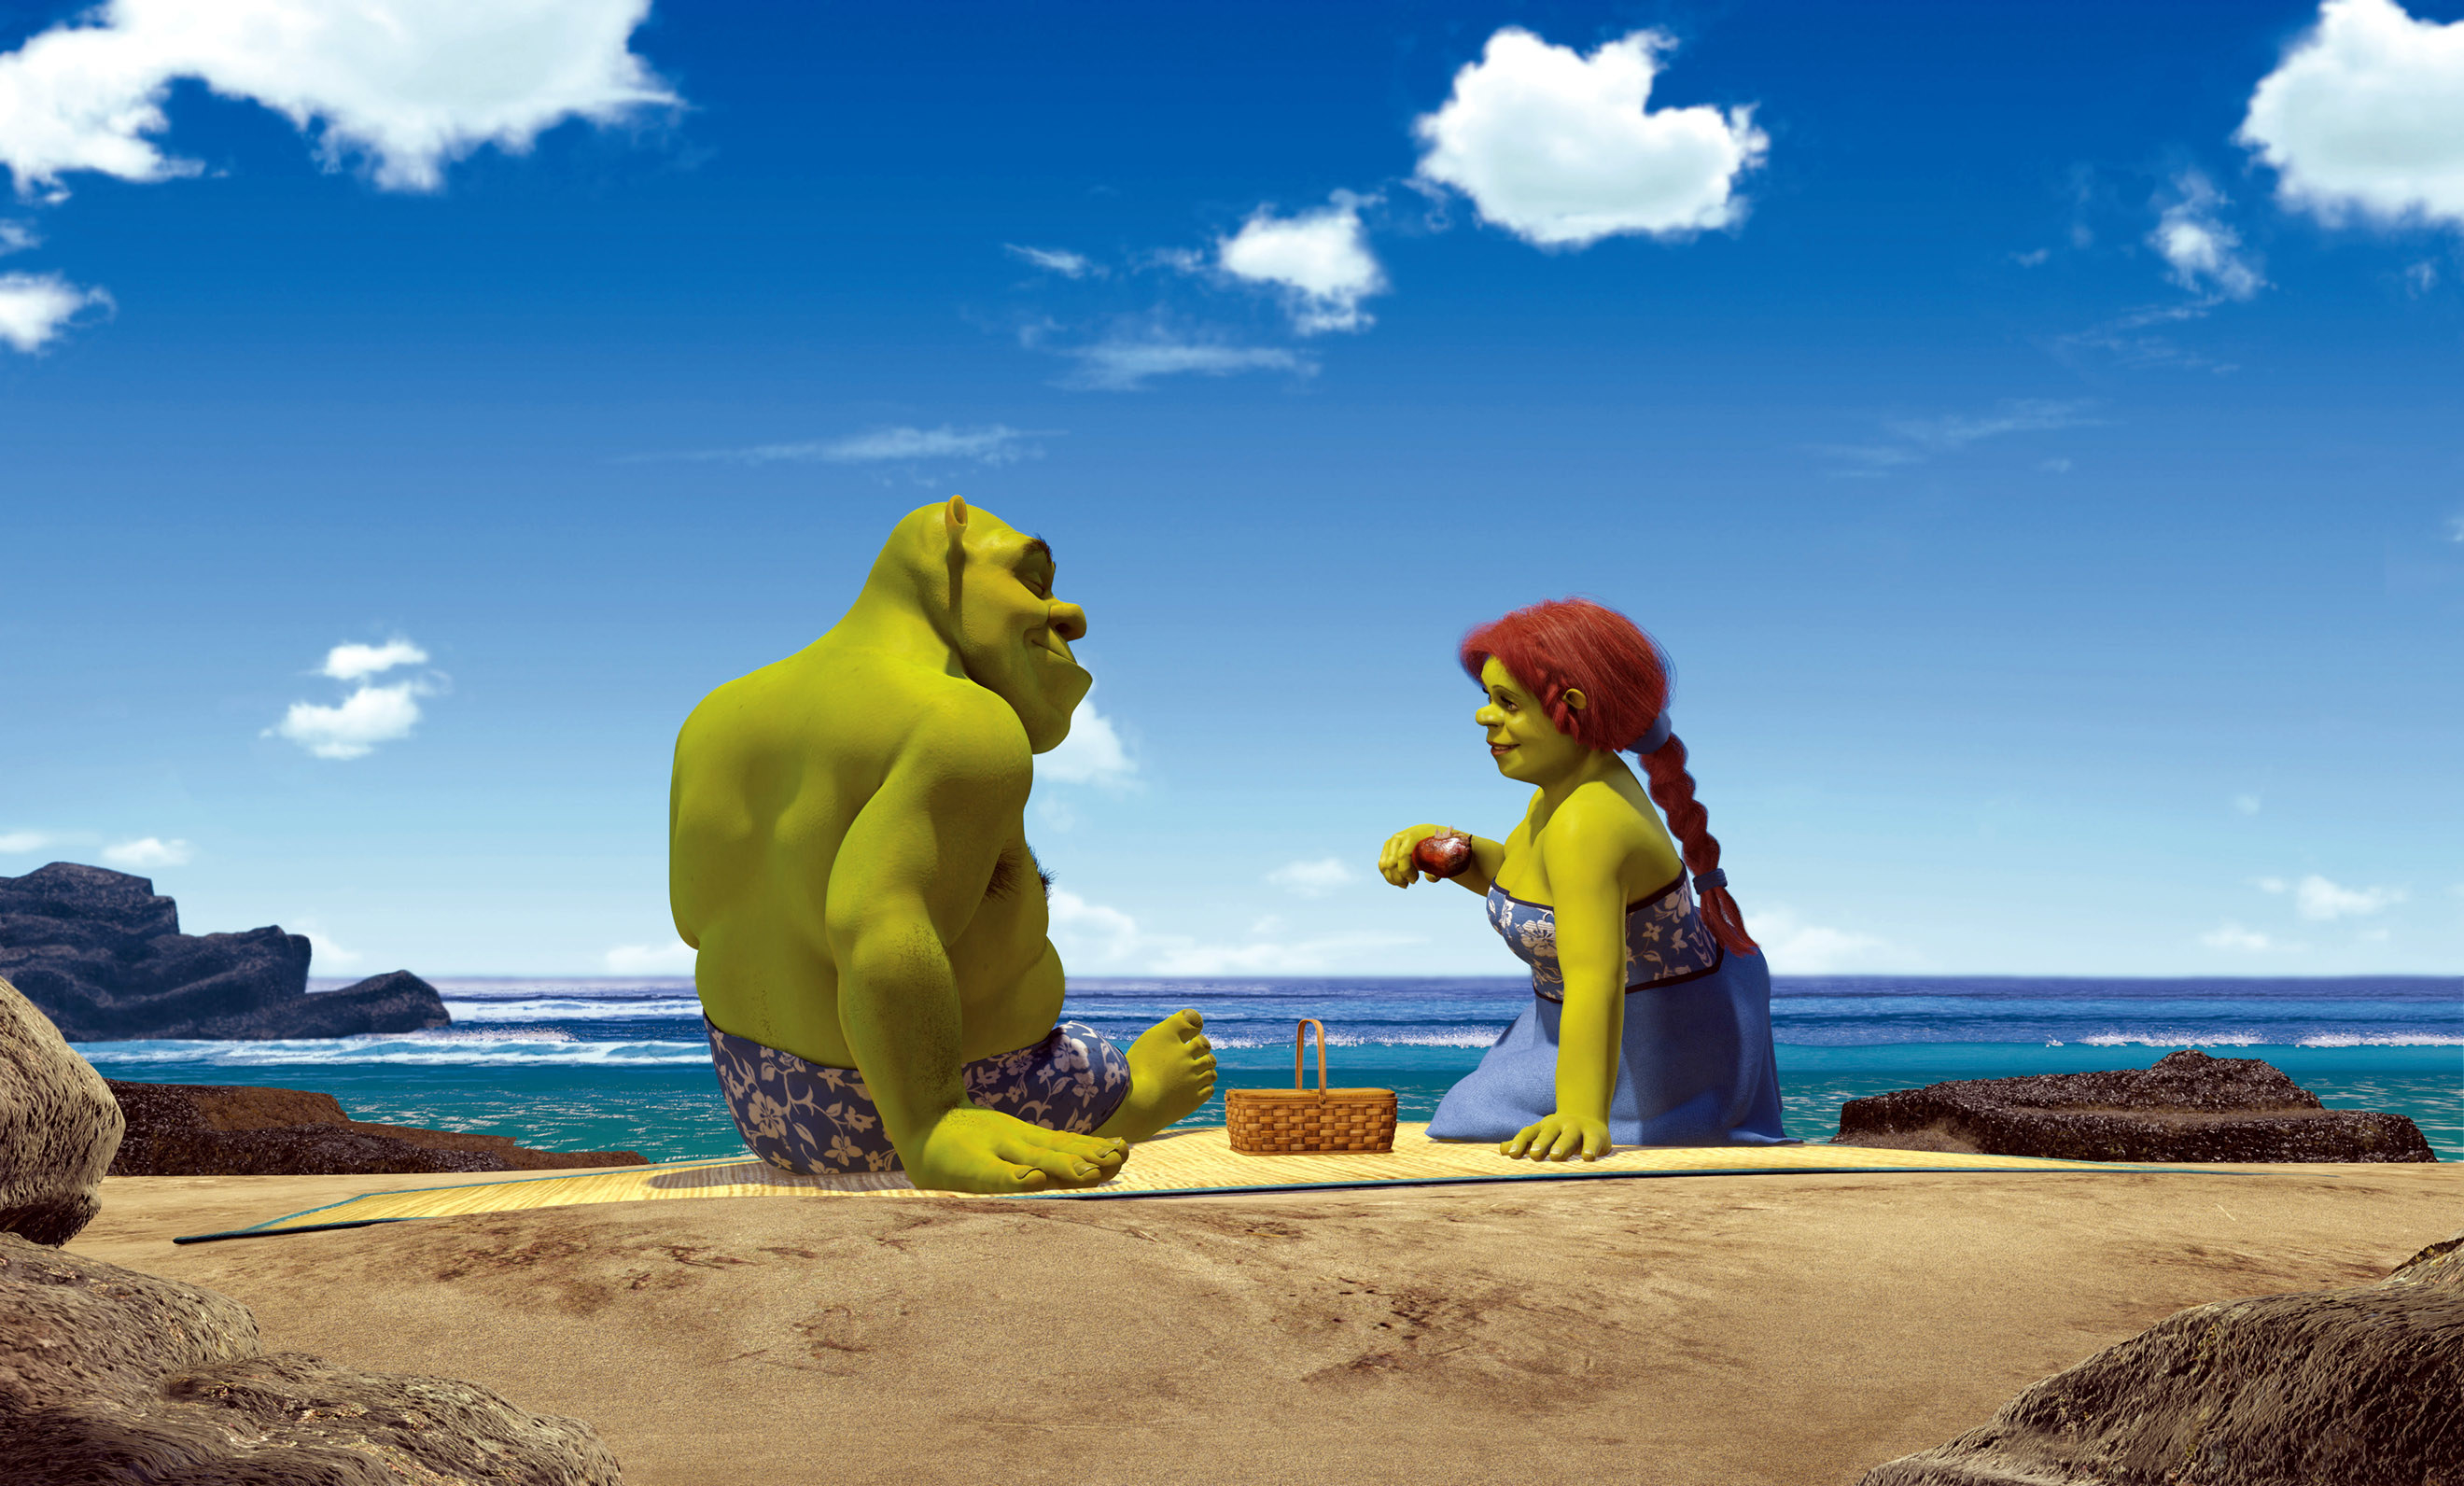 Shrek and Princess Fiona at the beach.